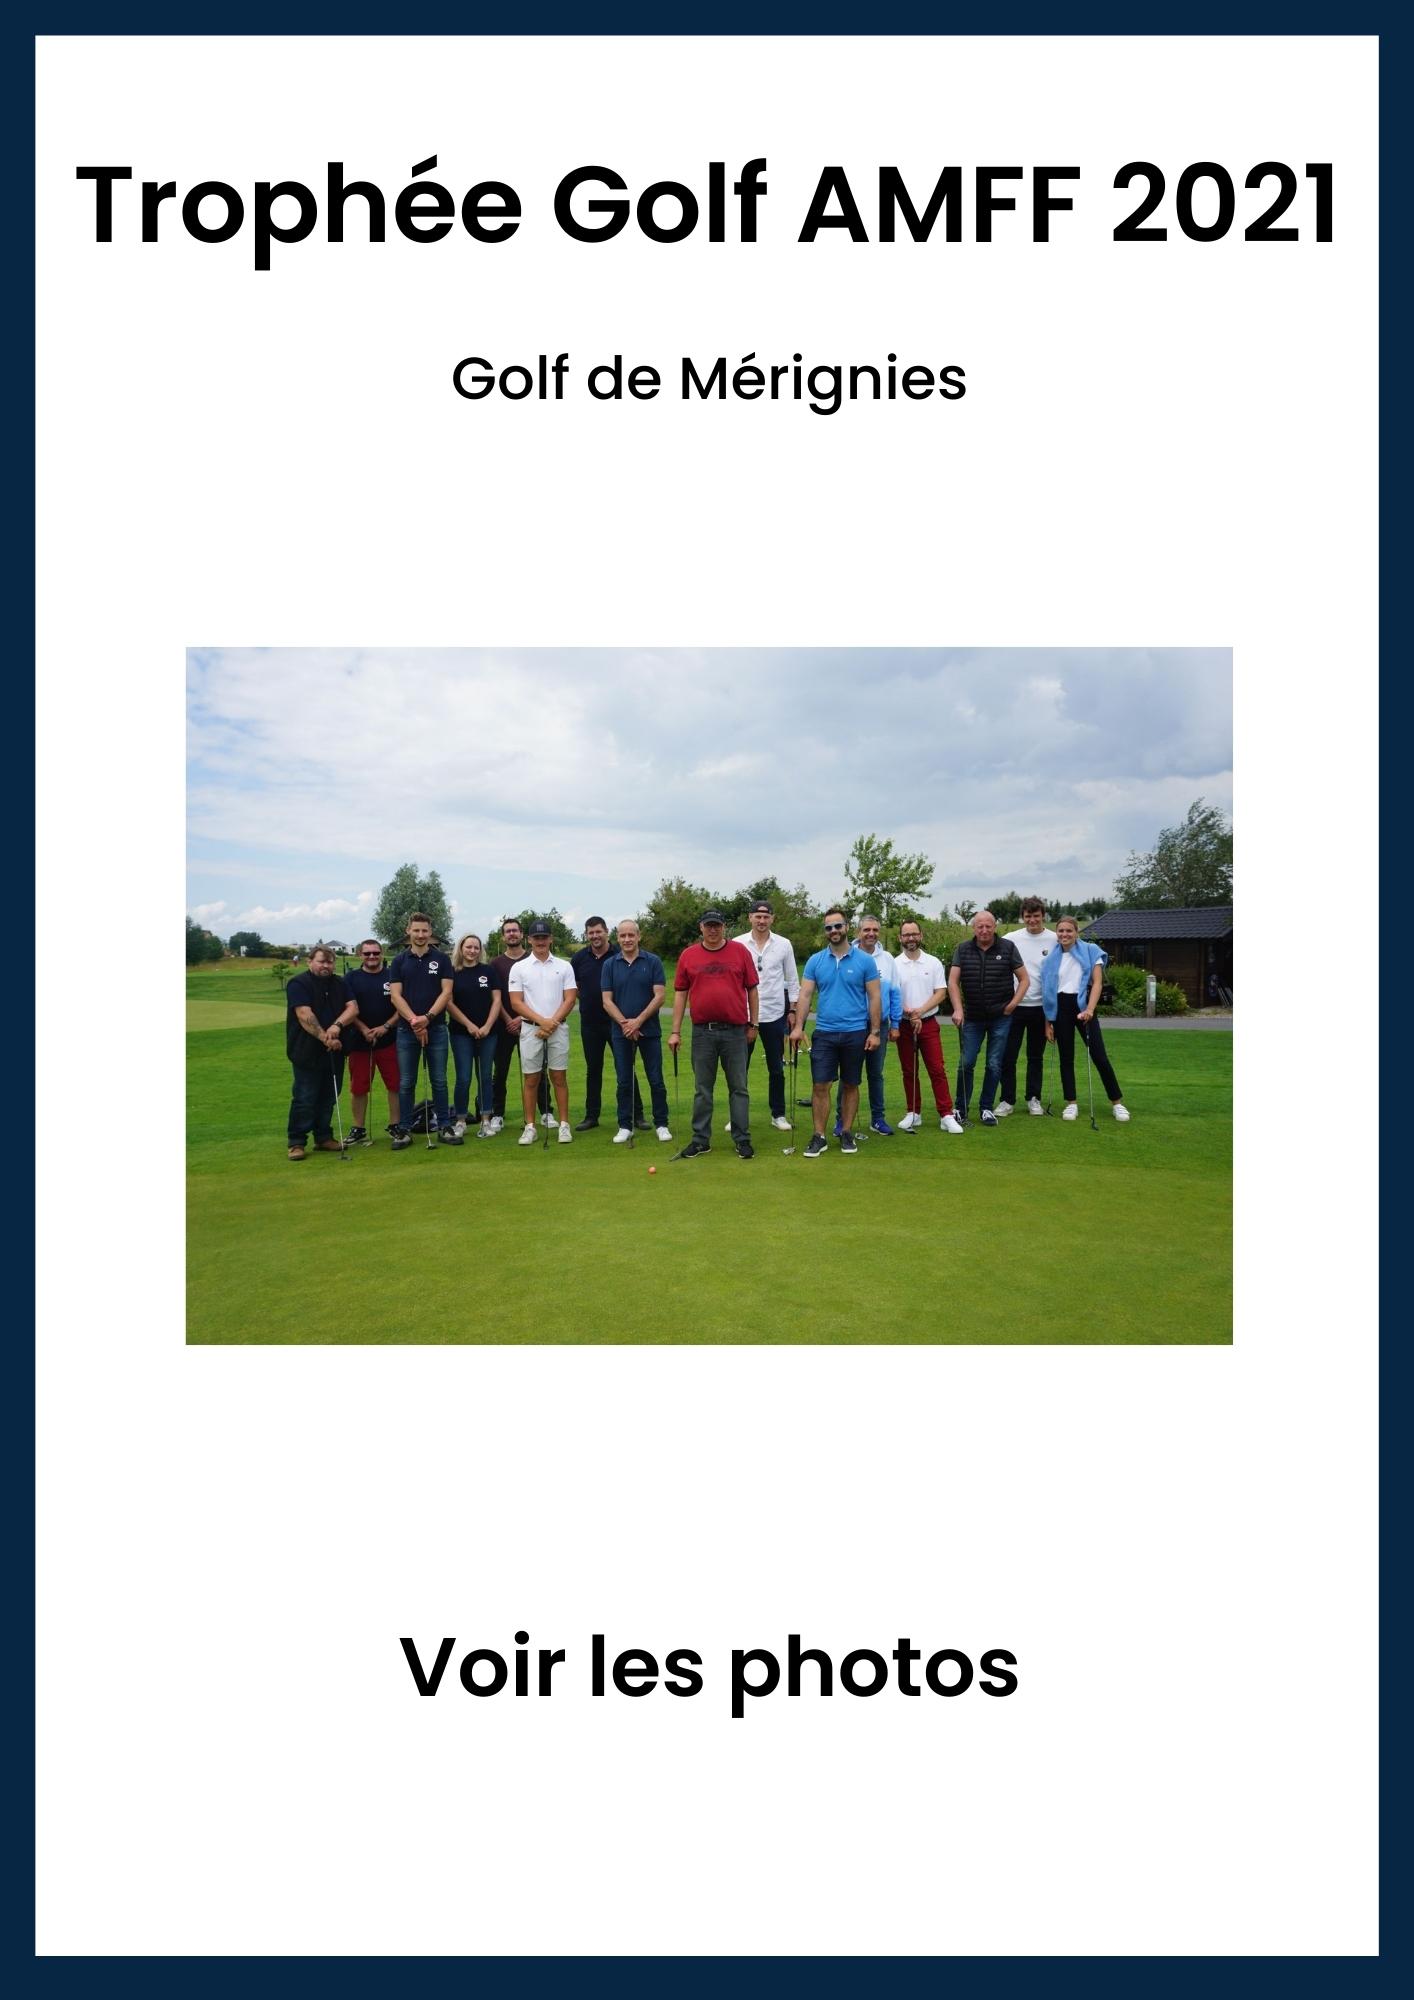 Trophée Golf de Mérignies